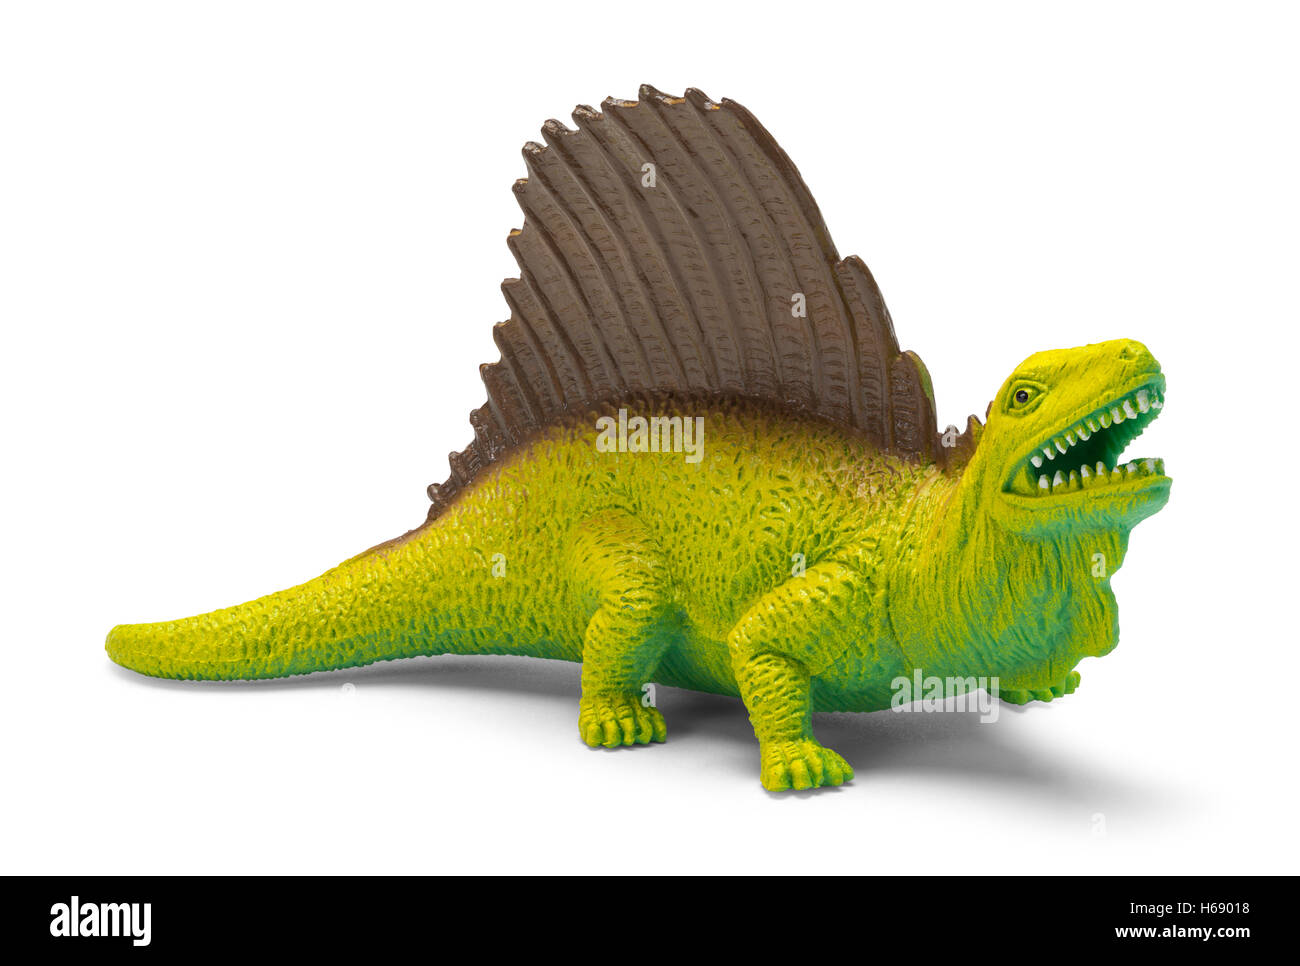 Kunststoff grün Dinosaurier Spielzeug, Isolated on White Background. Stockfoto